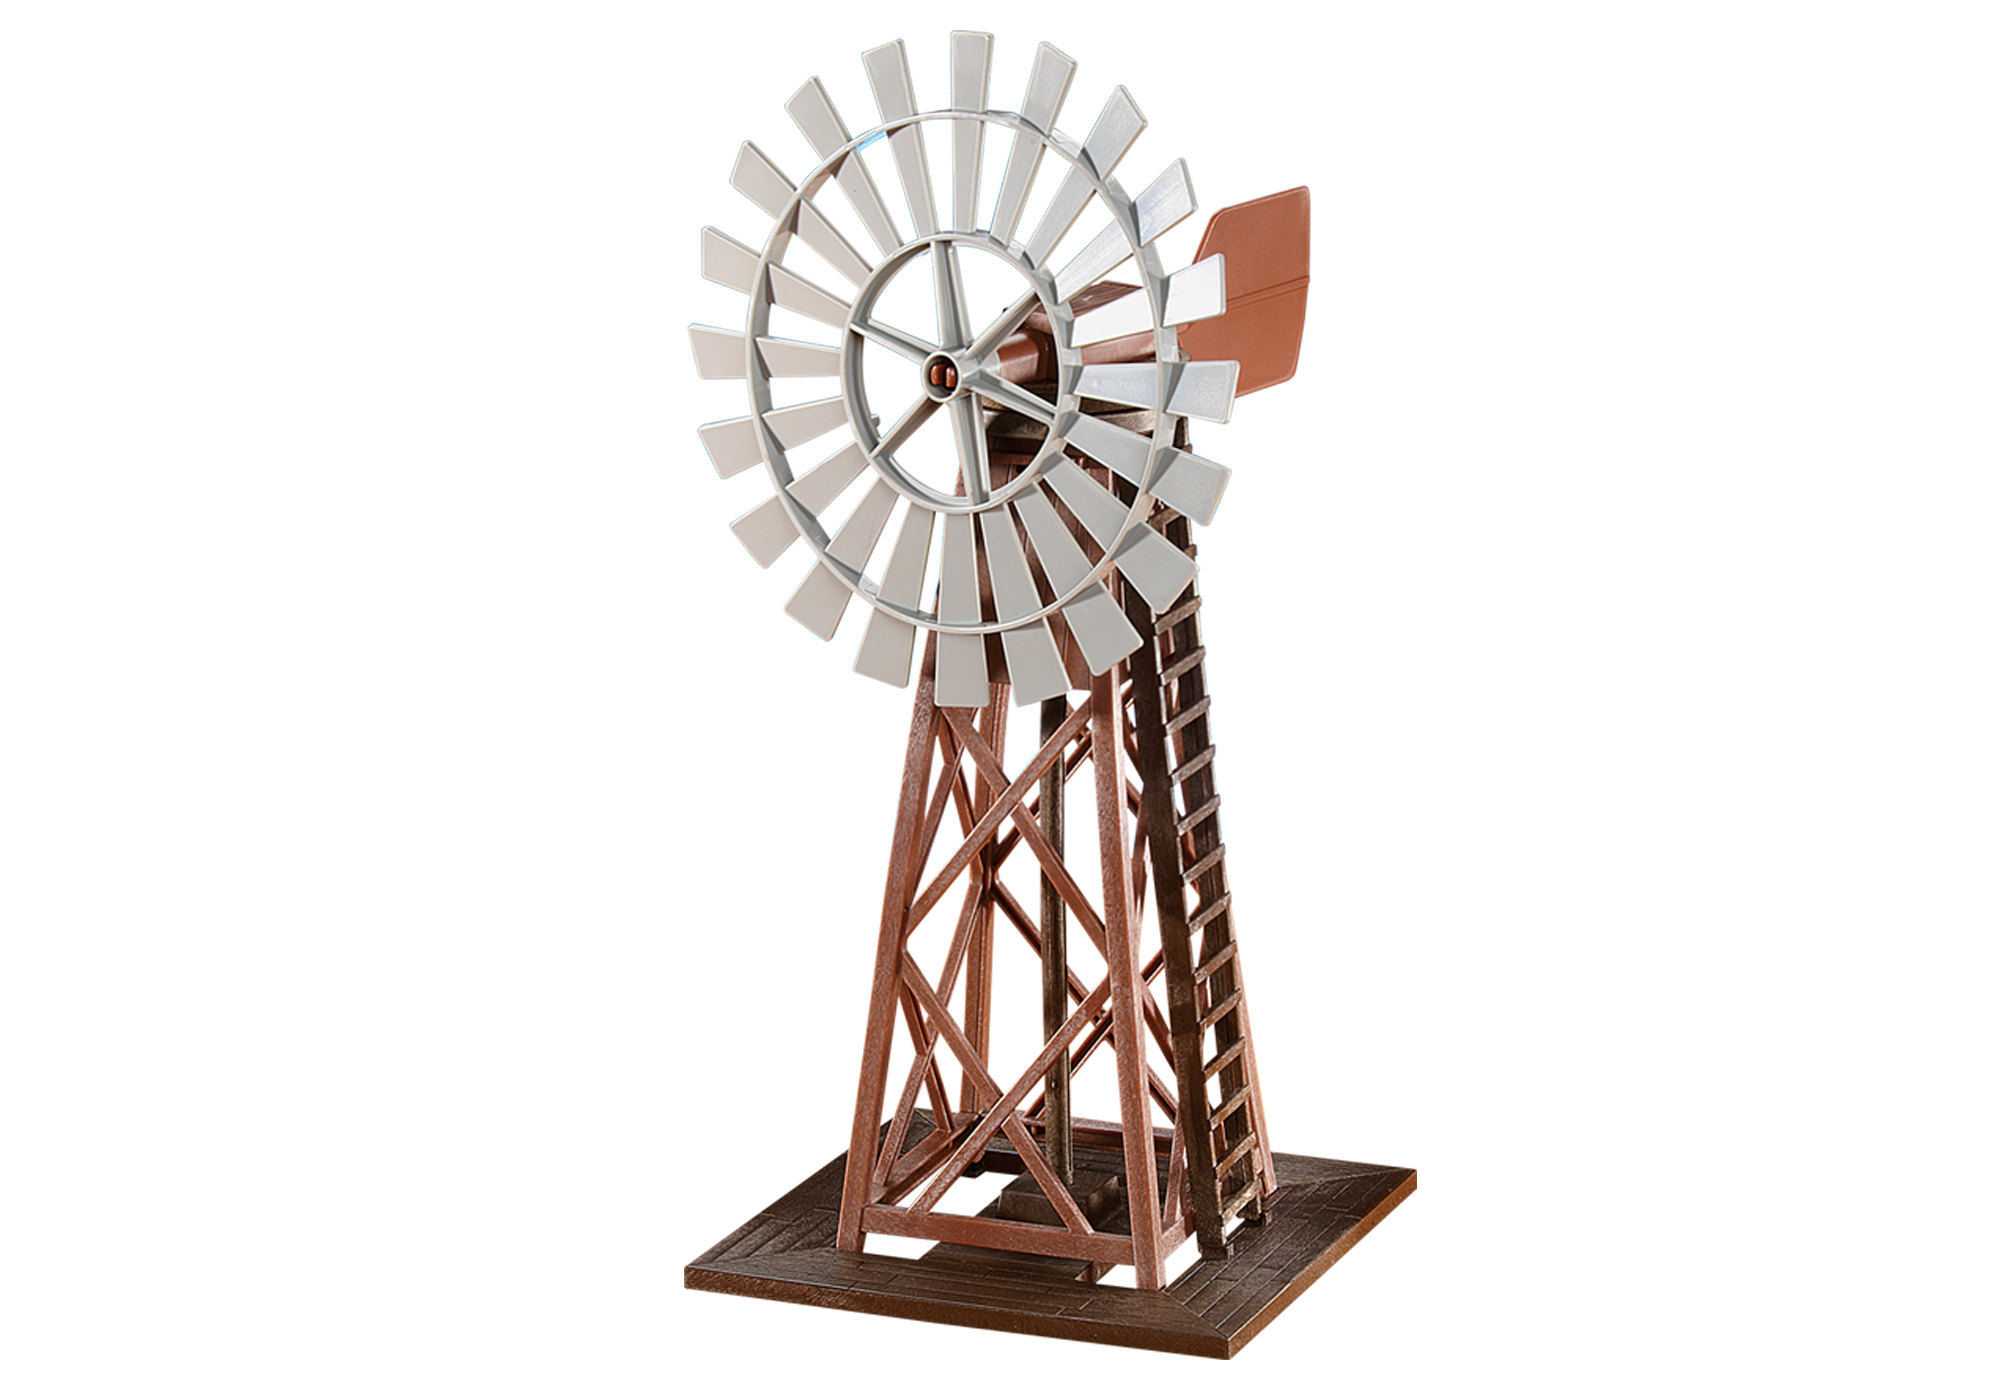 windmill usa